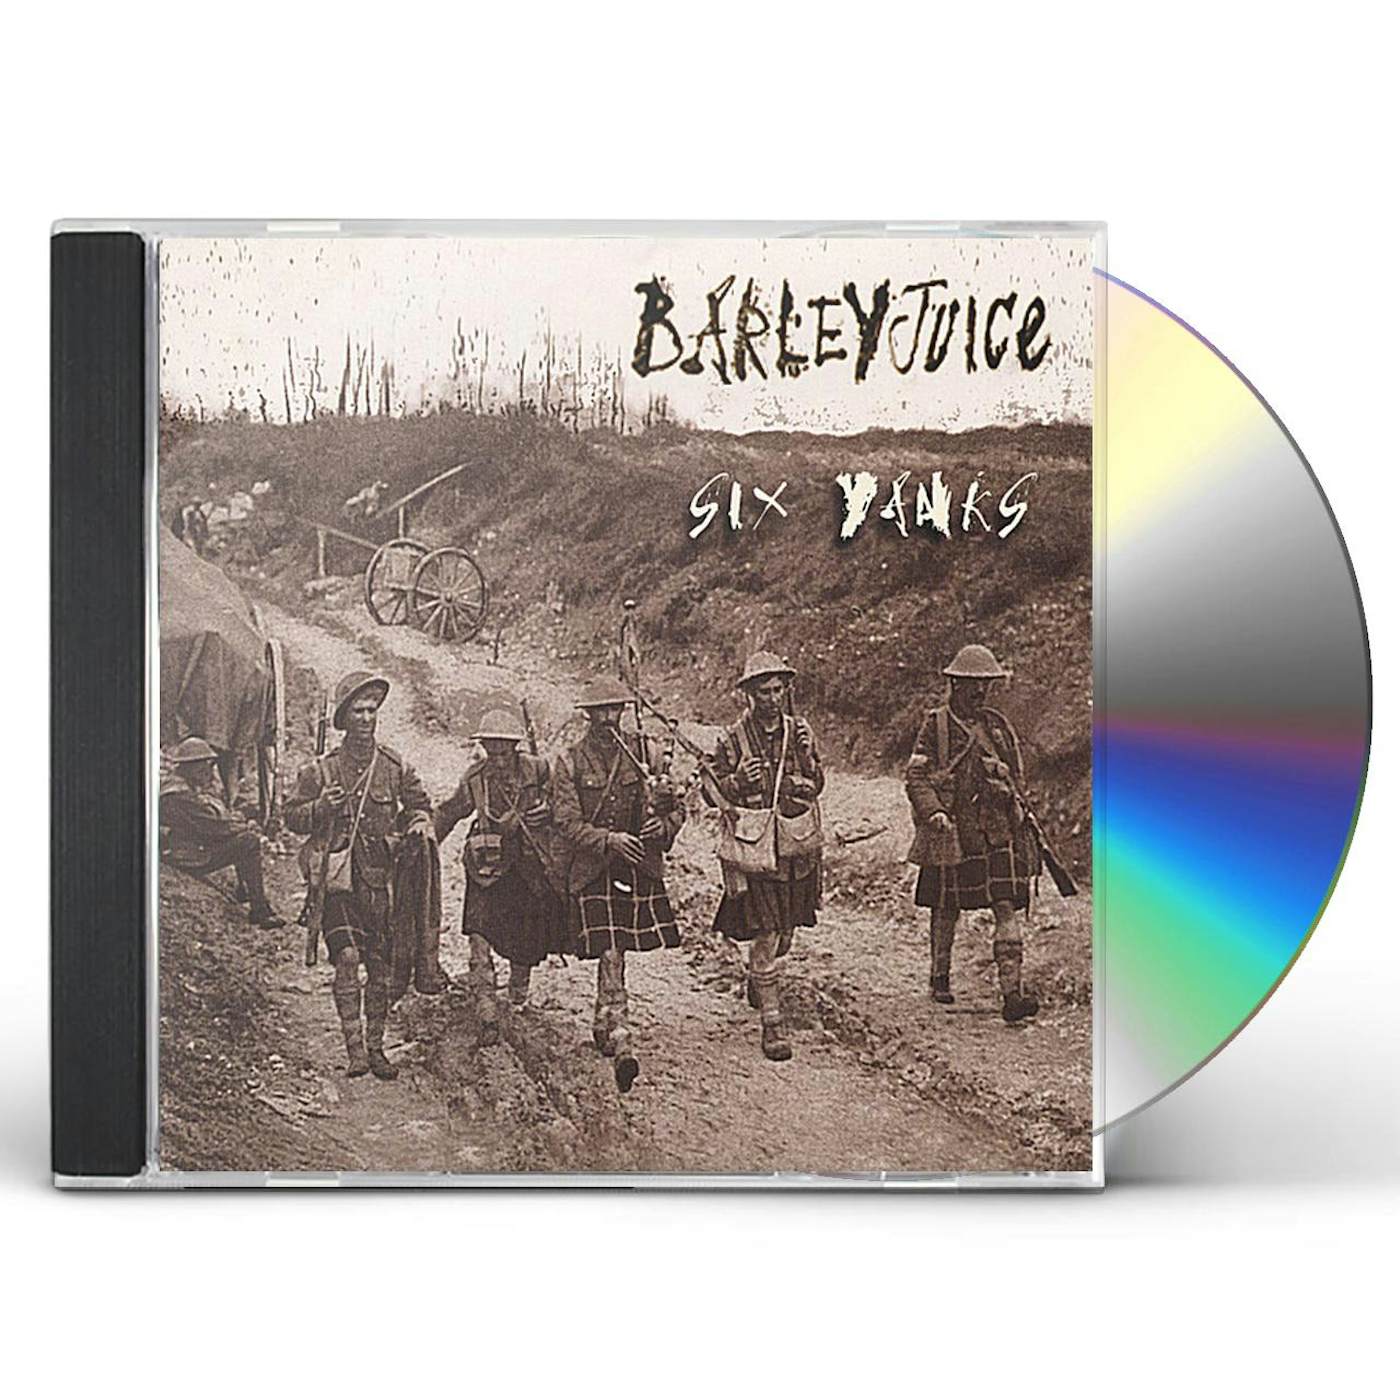 Barleyjuice SIX YANKS CD